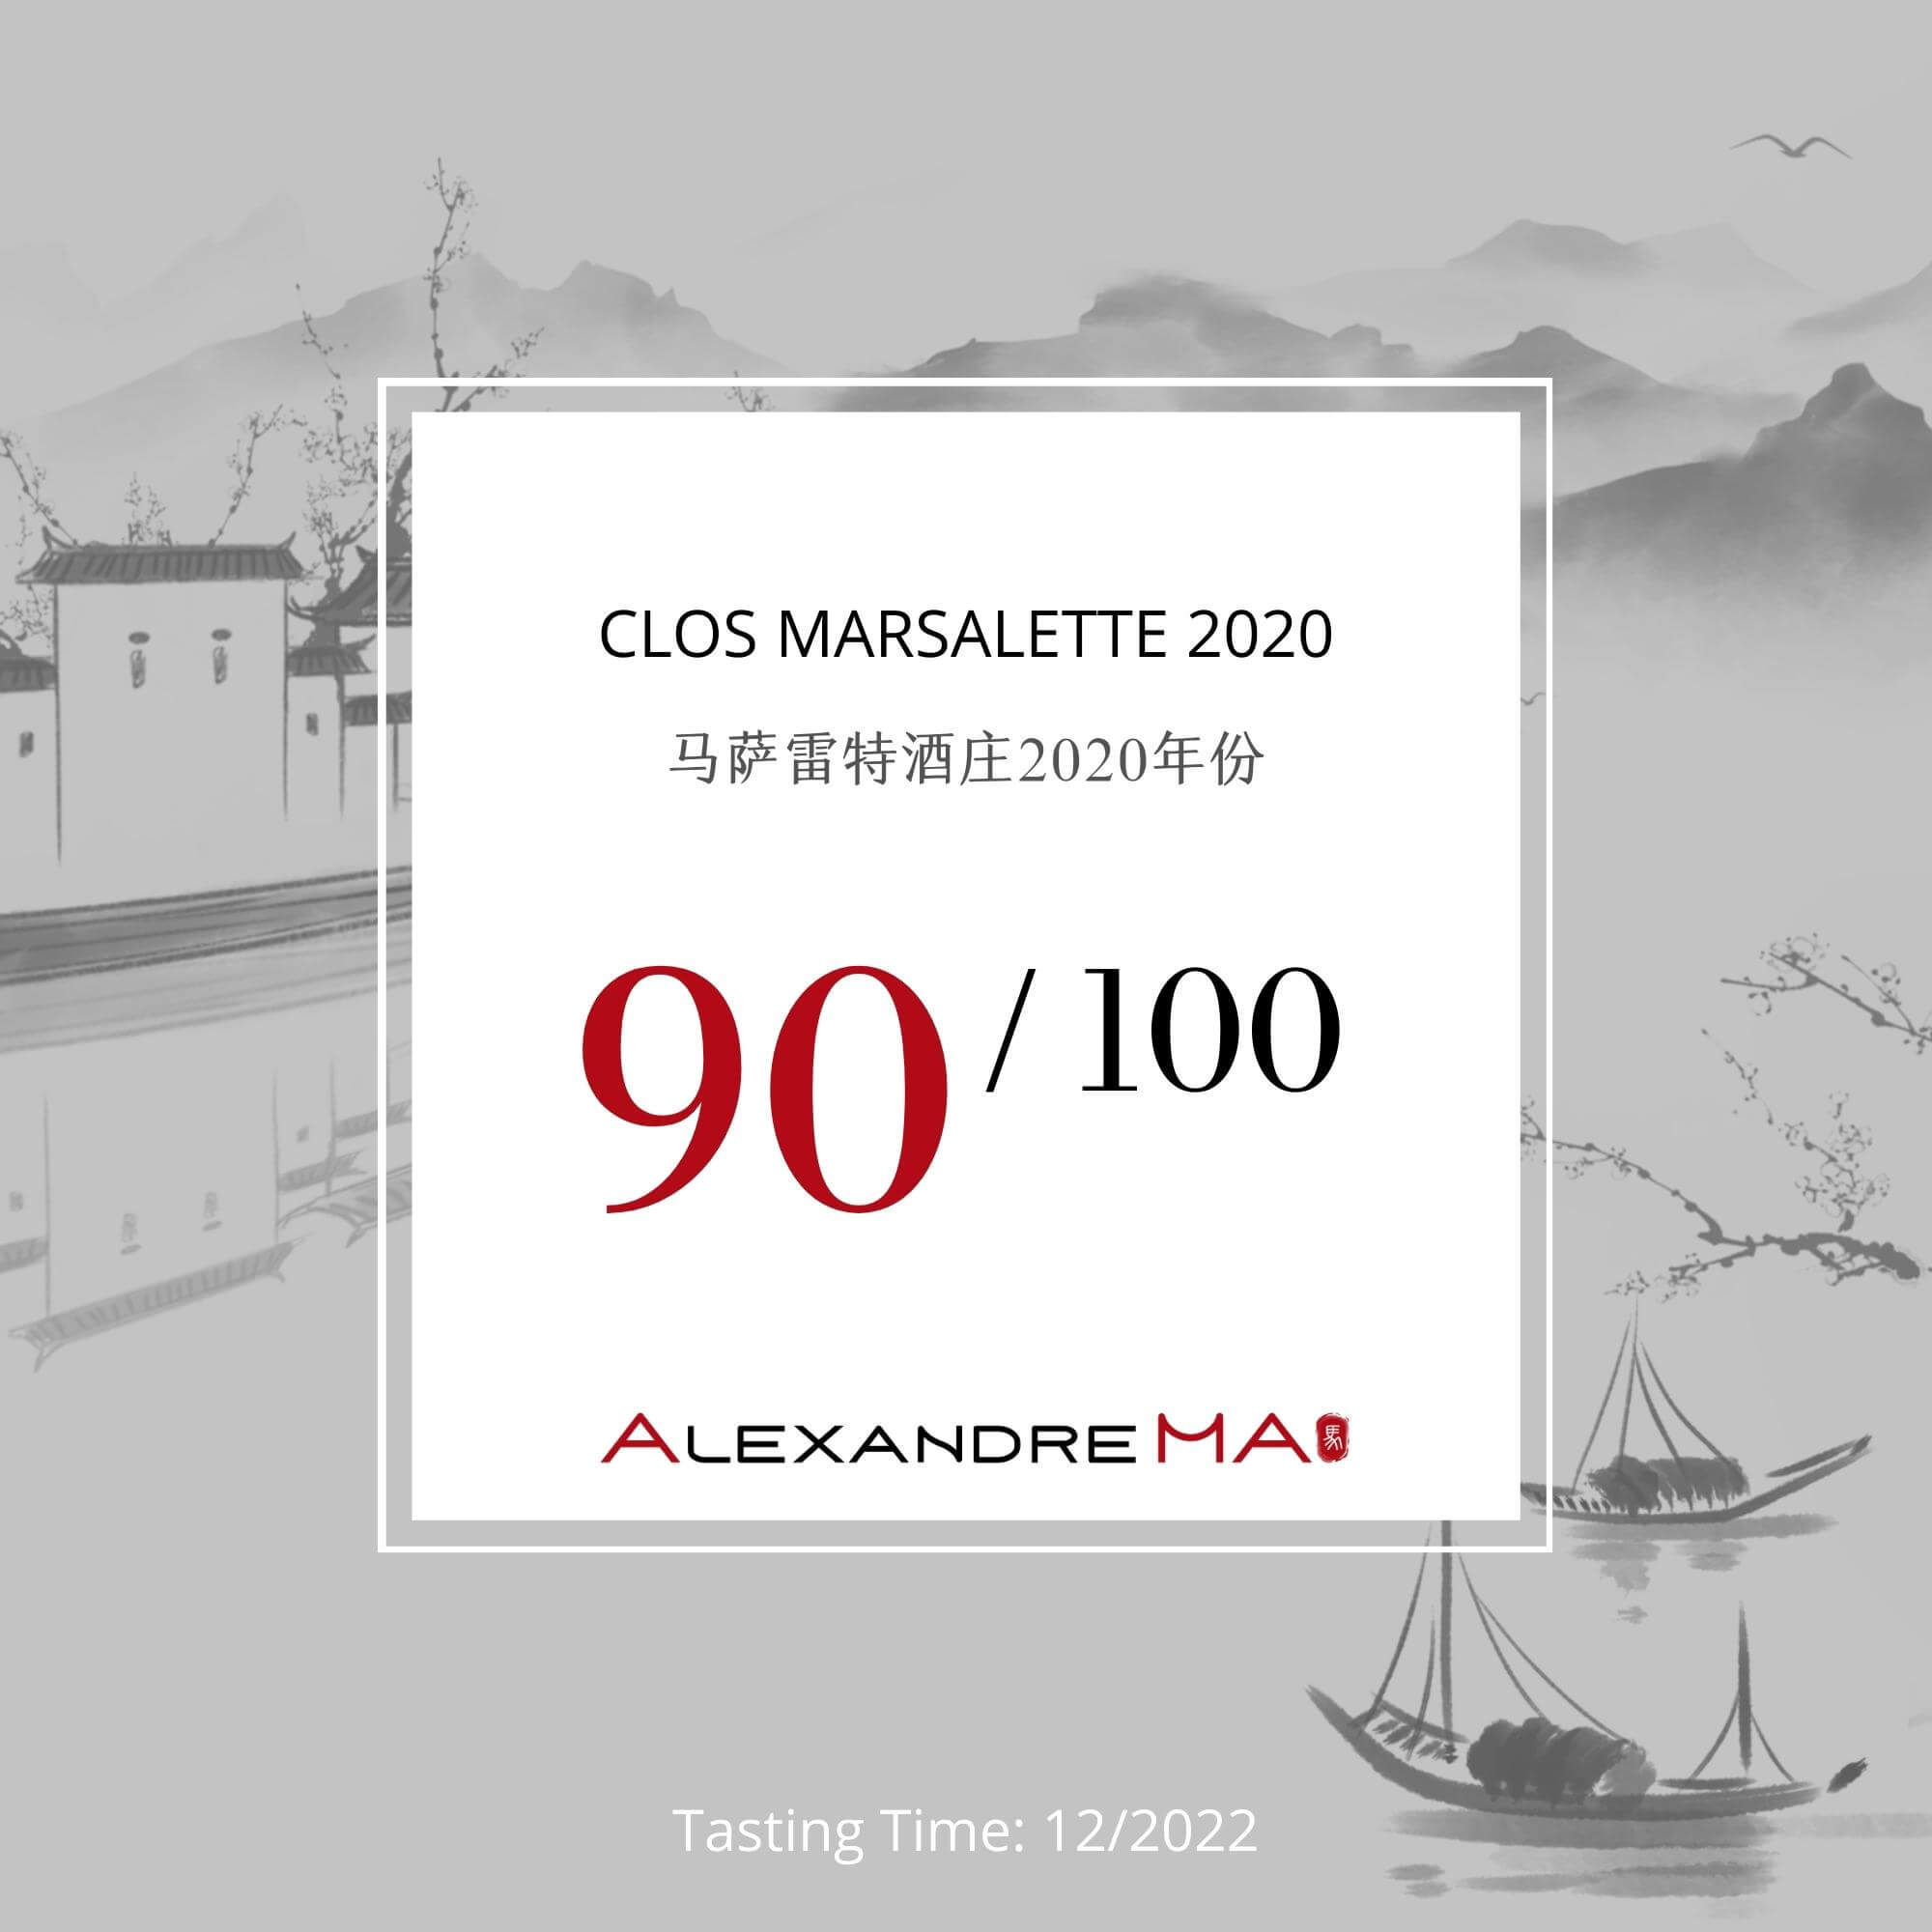 Clos Marsalette 2020 - Alexandre MA